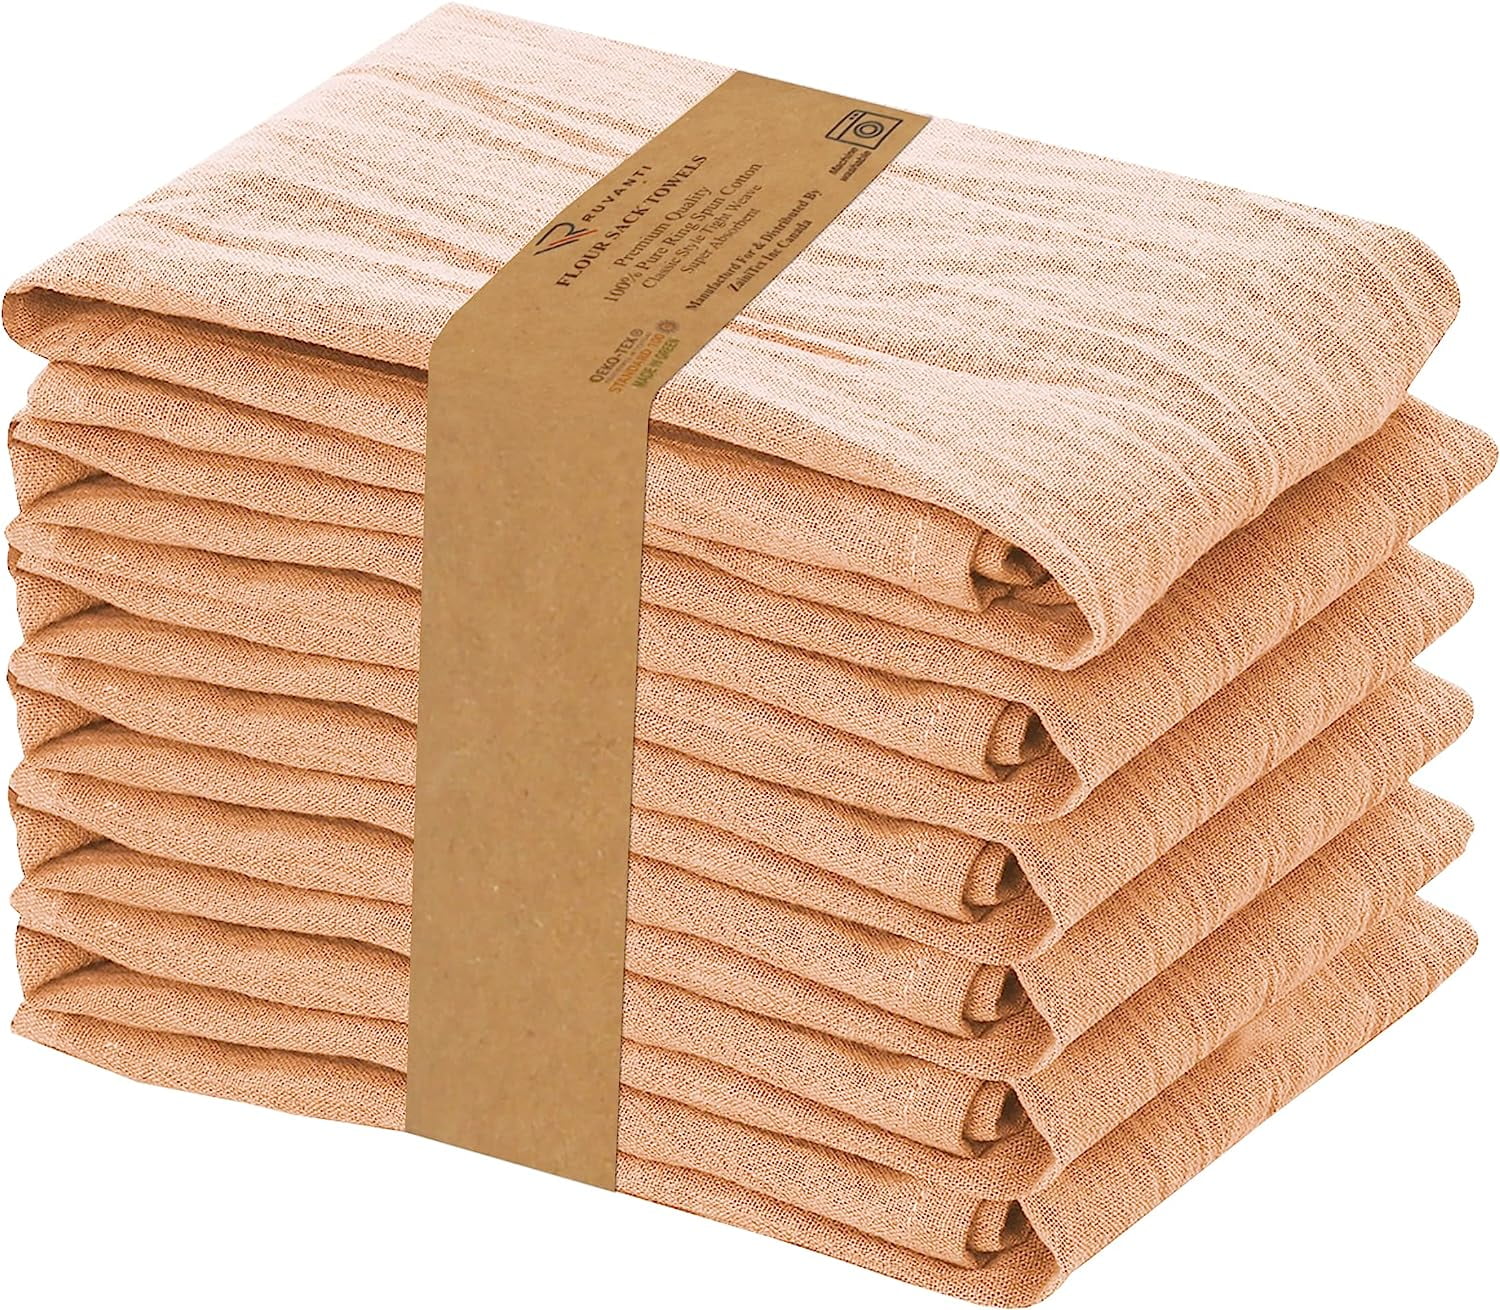  ACCENTHOME Natural Cotton Linen Napkin Set of 12 18x18